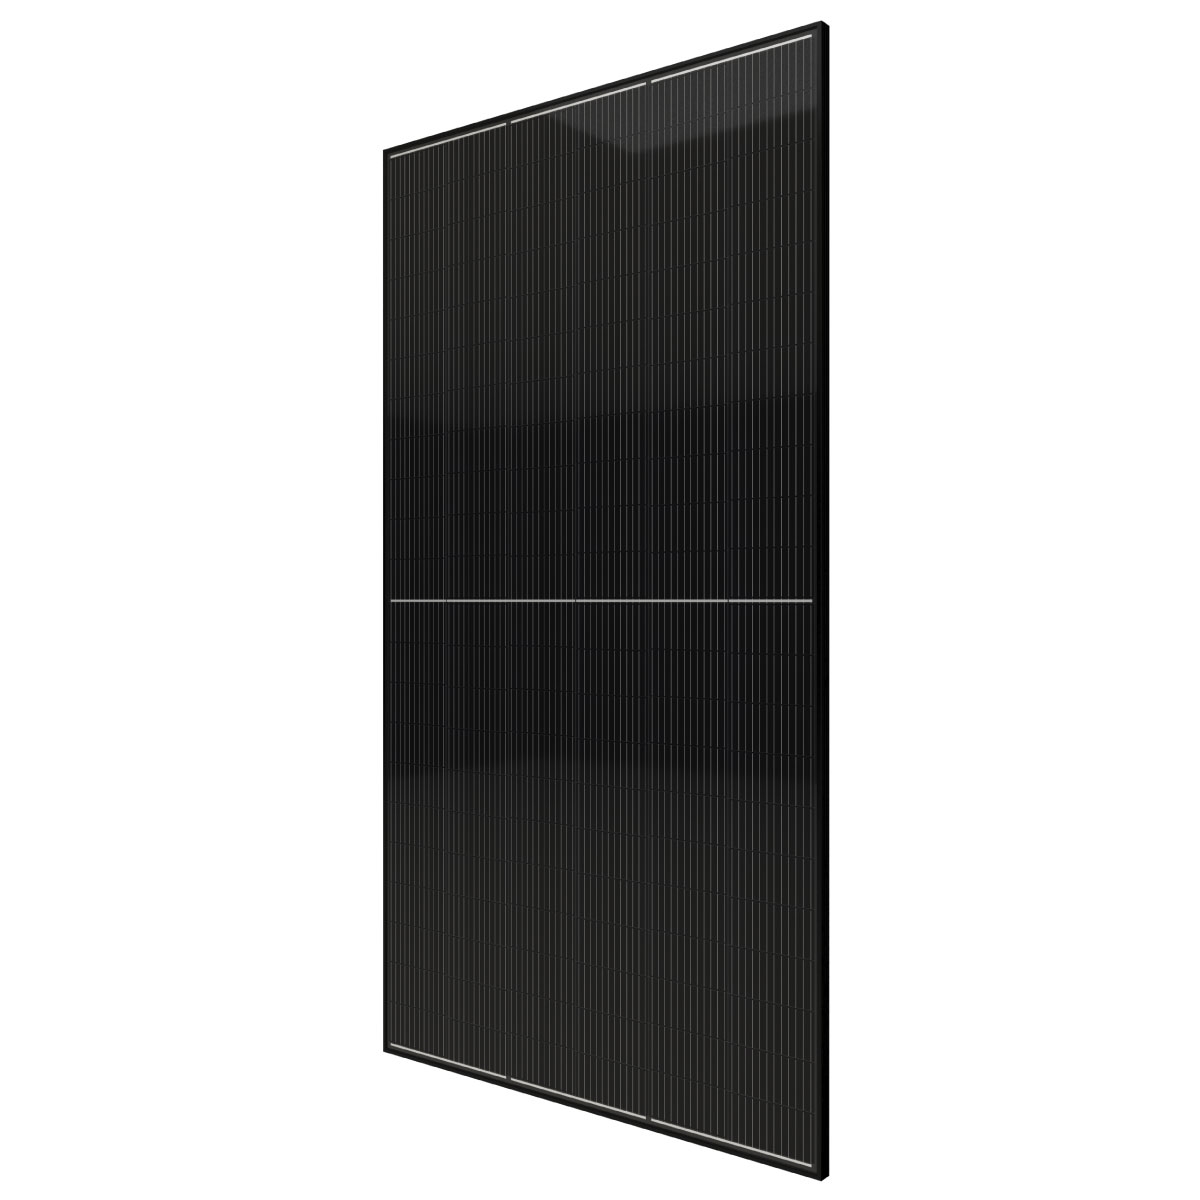 TommaTech 655Wp 132PM M12 Dark Series Solar Panel